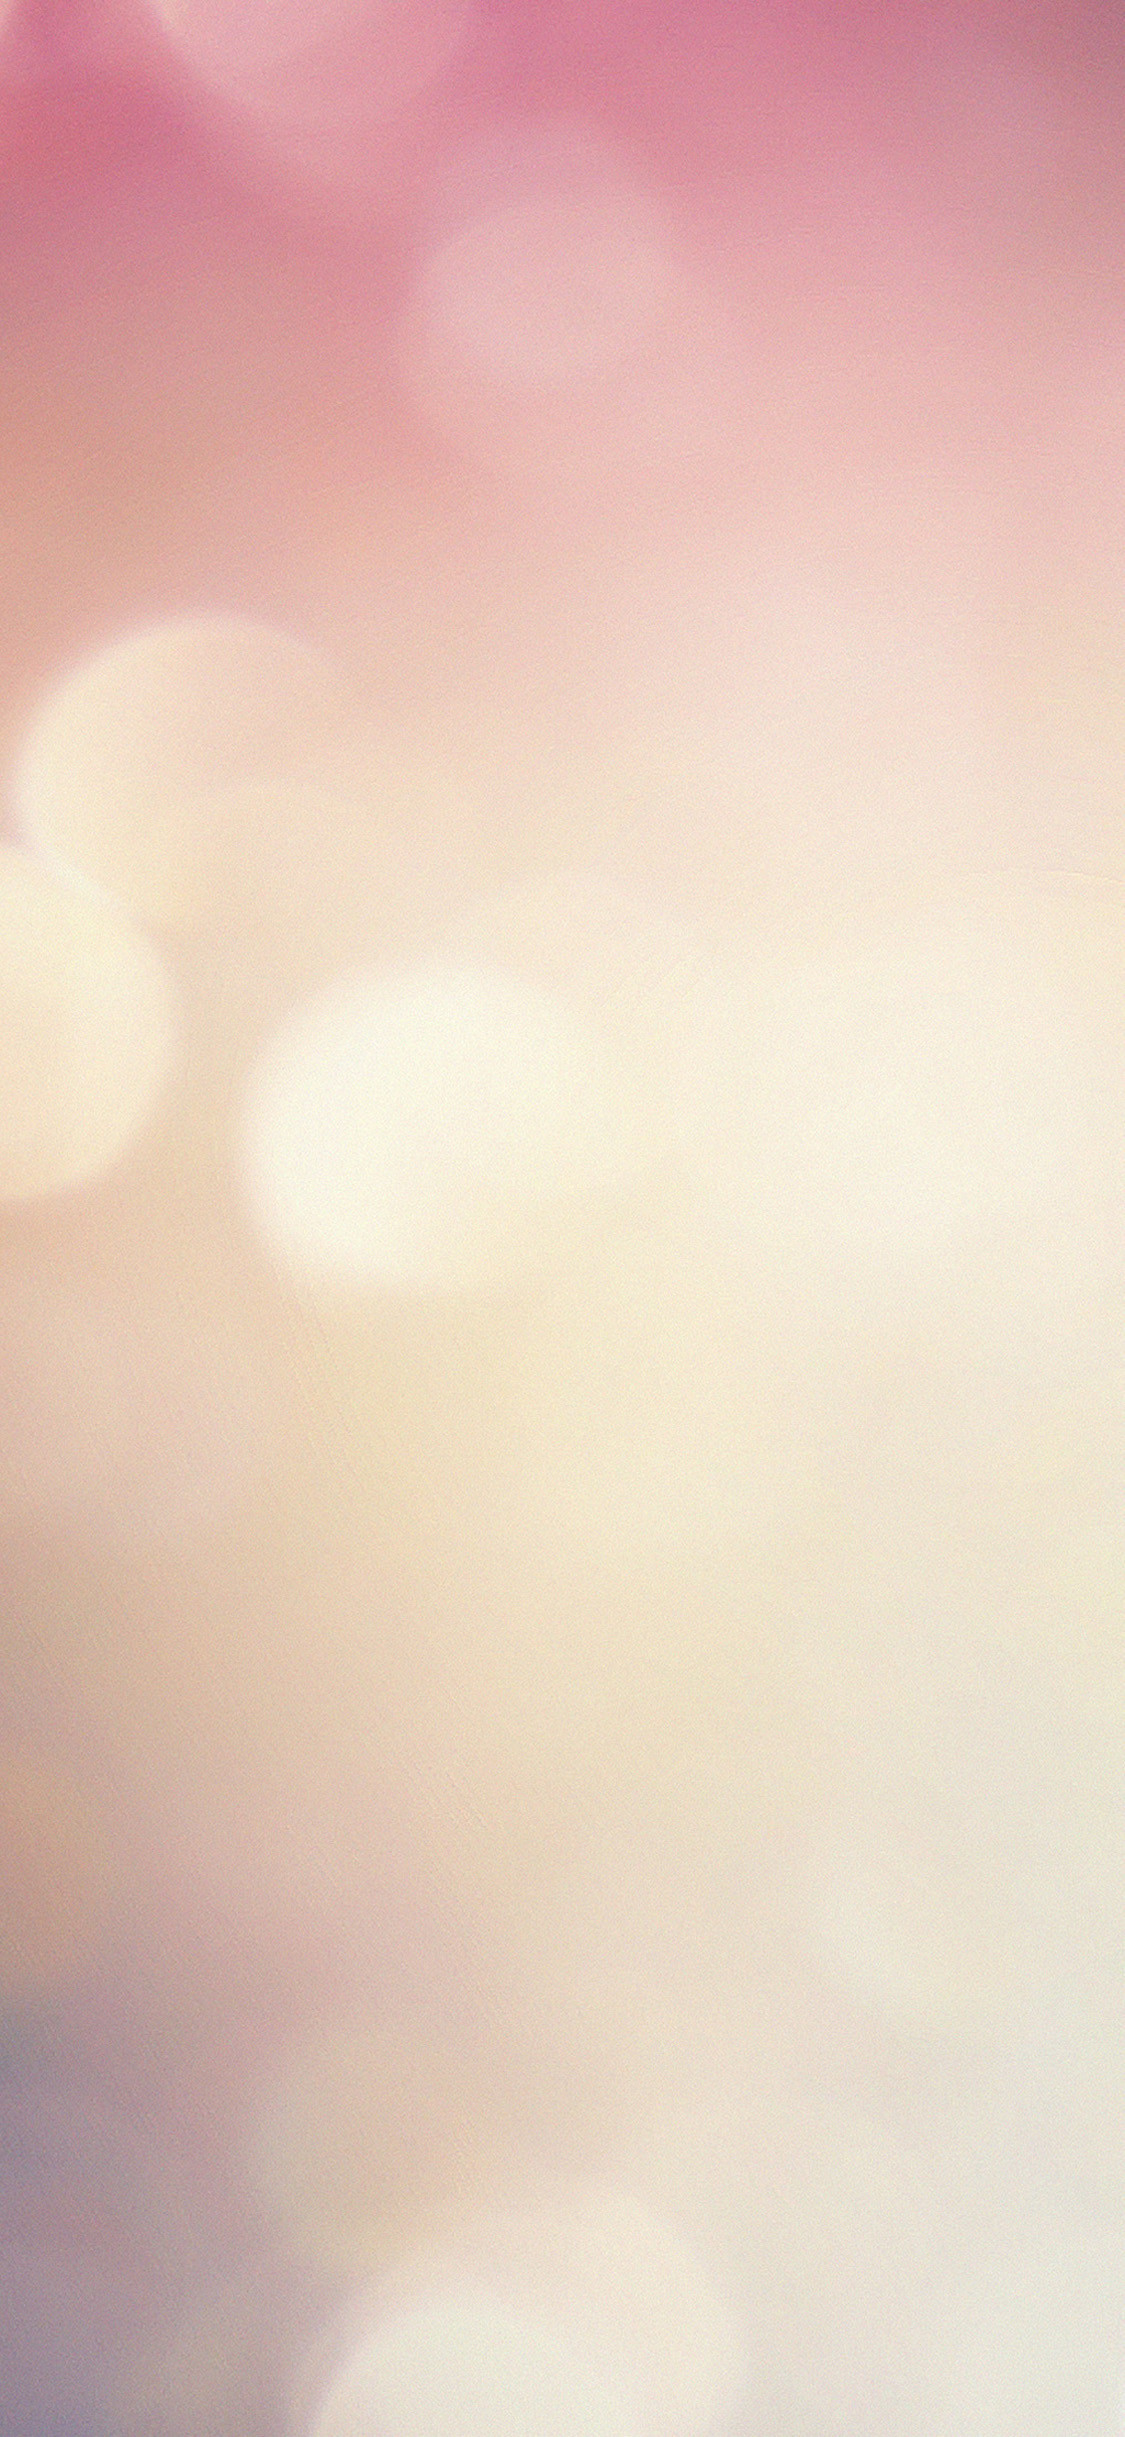 1125x2437 winter-bokeh-shiny-lights-gradation-blur iPhone X Wallpaper